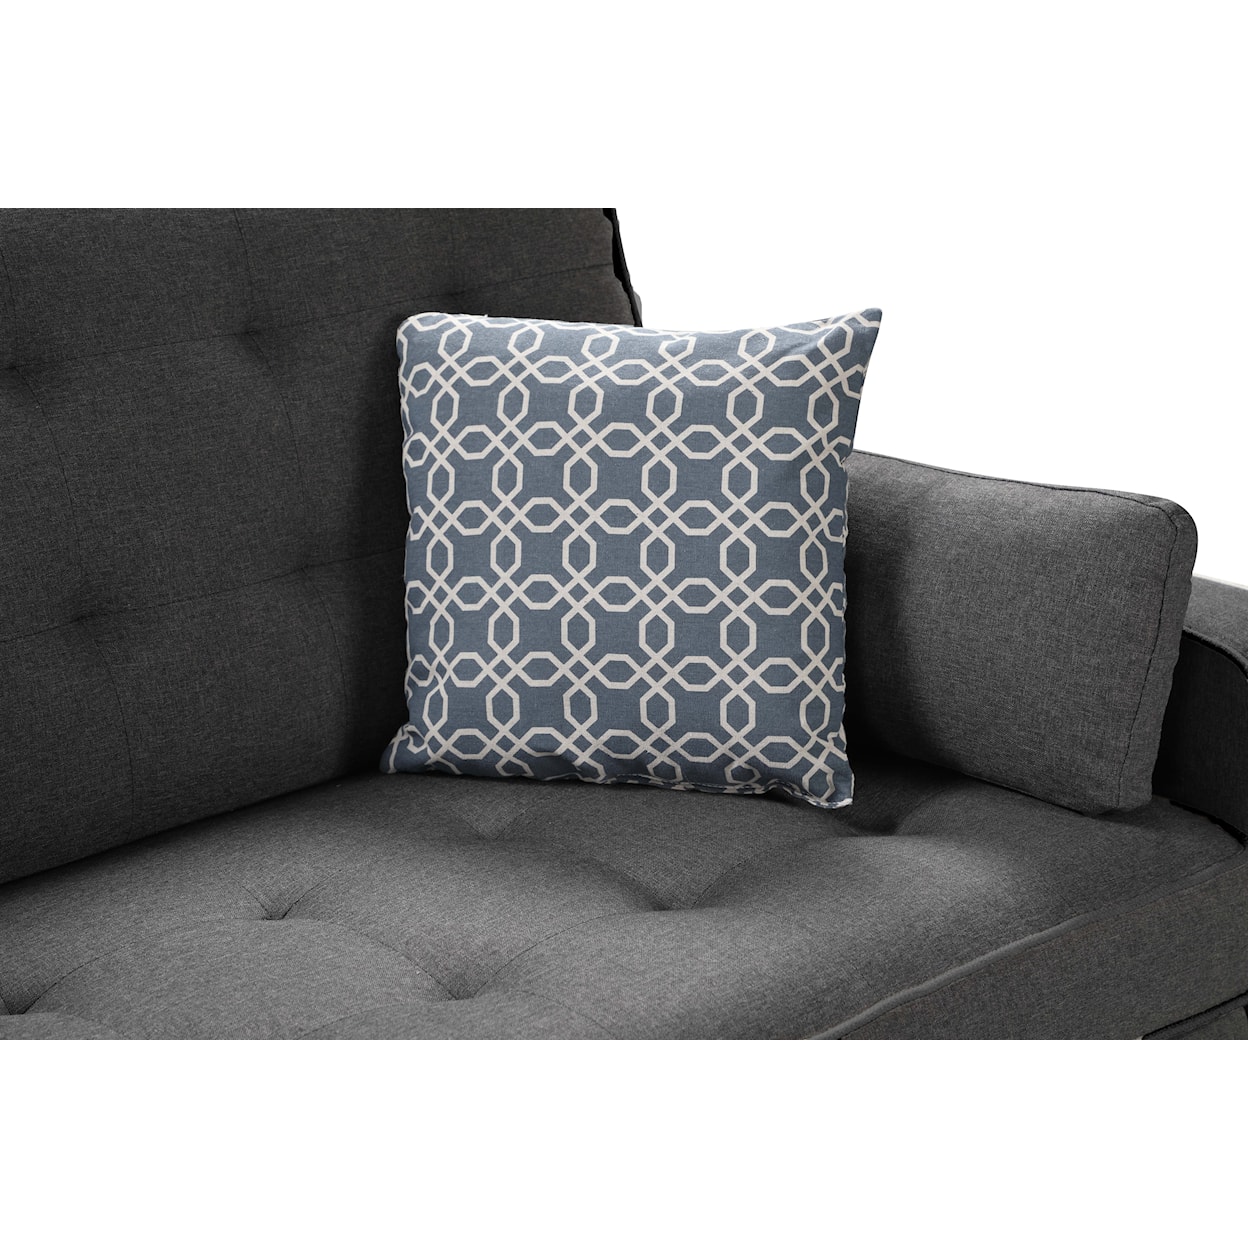 Exclusive William Modern Gray Fabric Sleeper Sofa